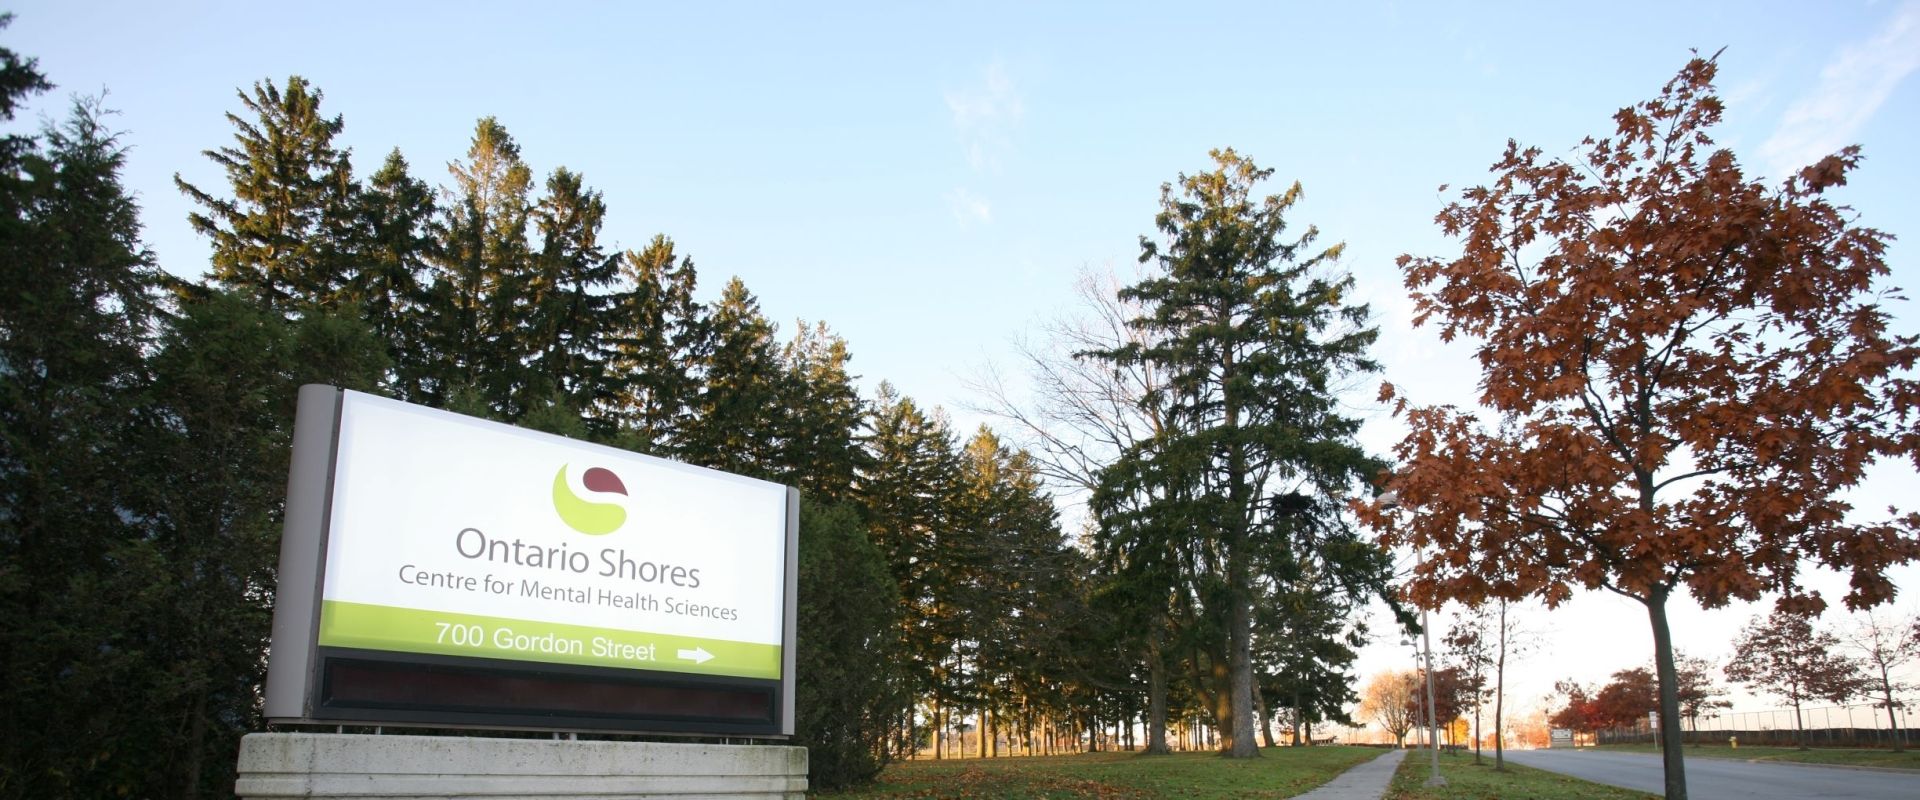 Sign at entrance of Ontario Shores